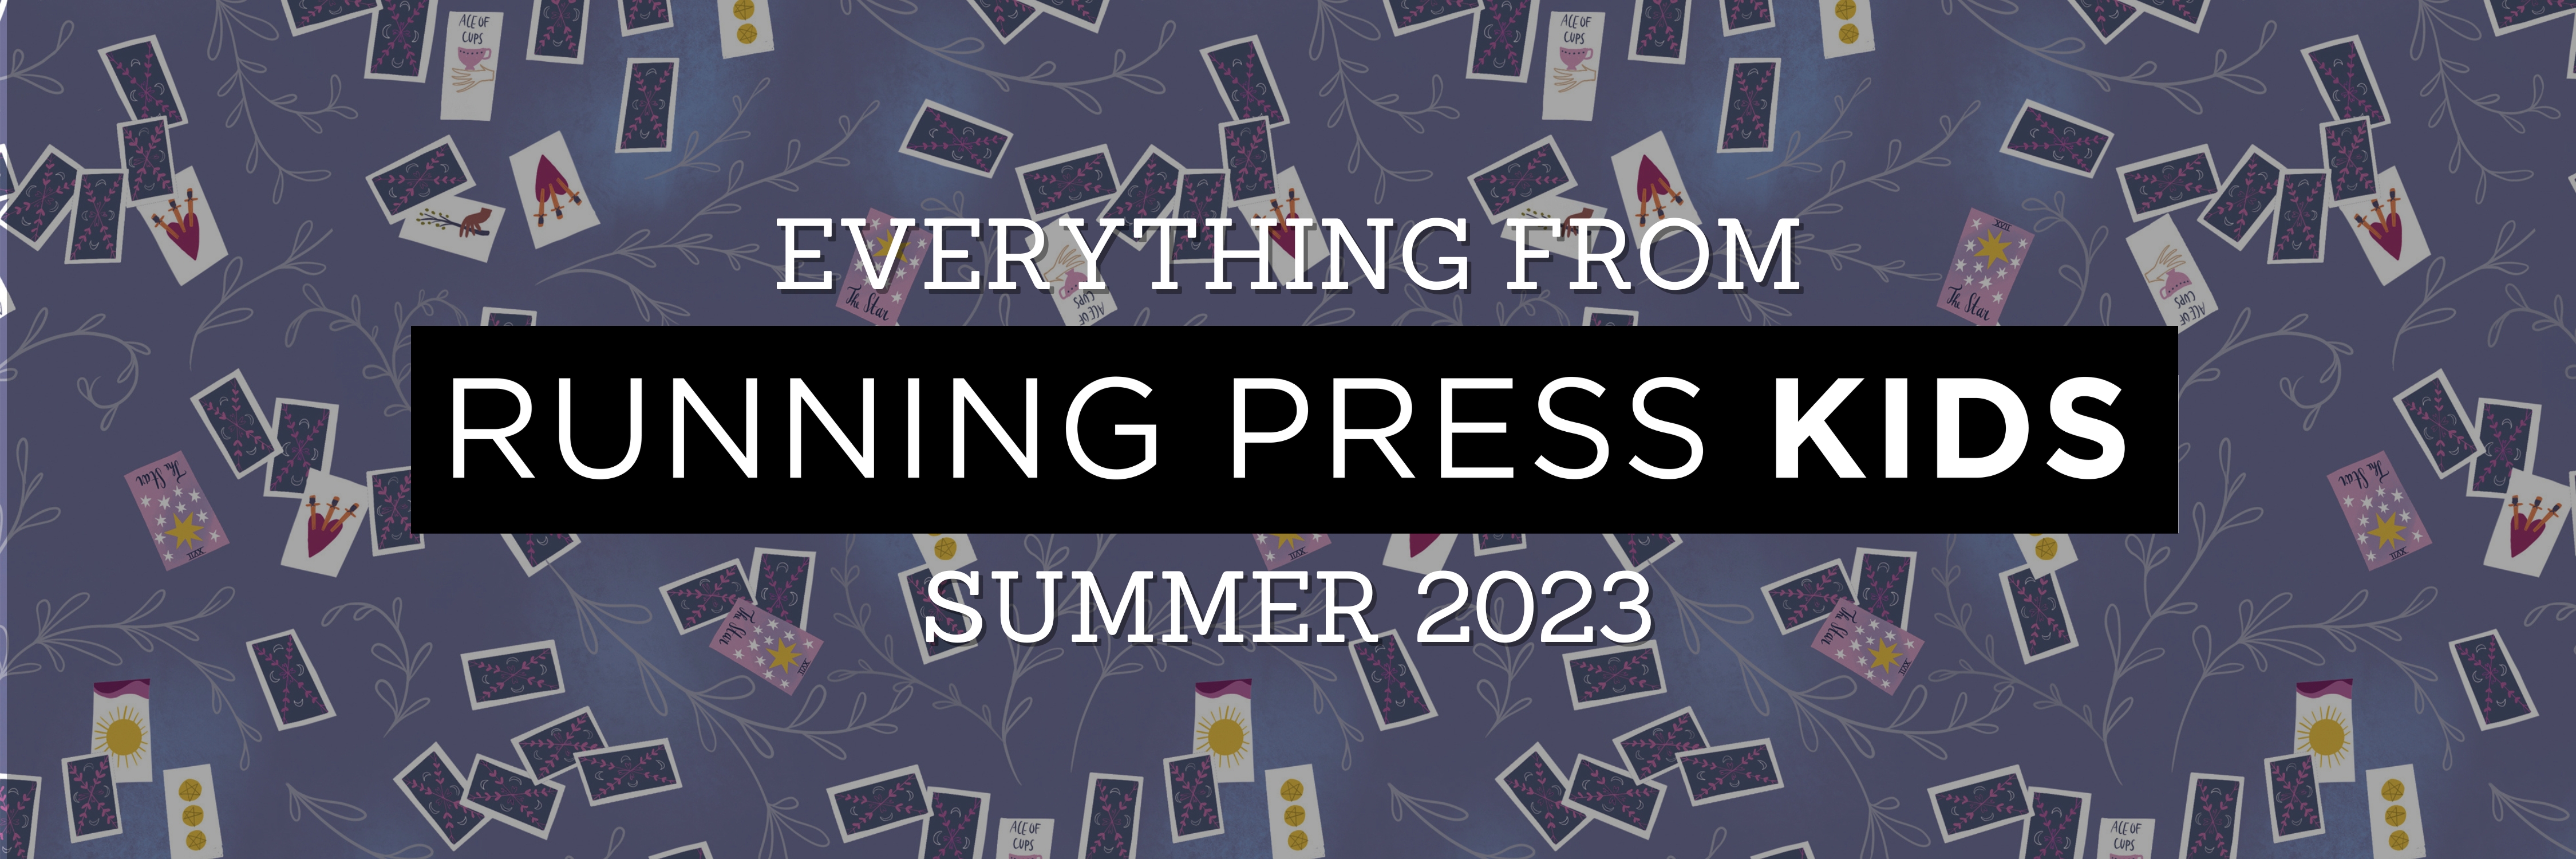 Designed banner reading "Everything From Running Press Kids Summer 2023"